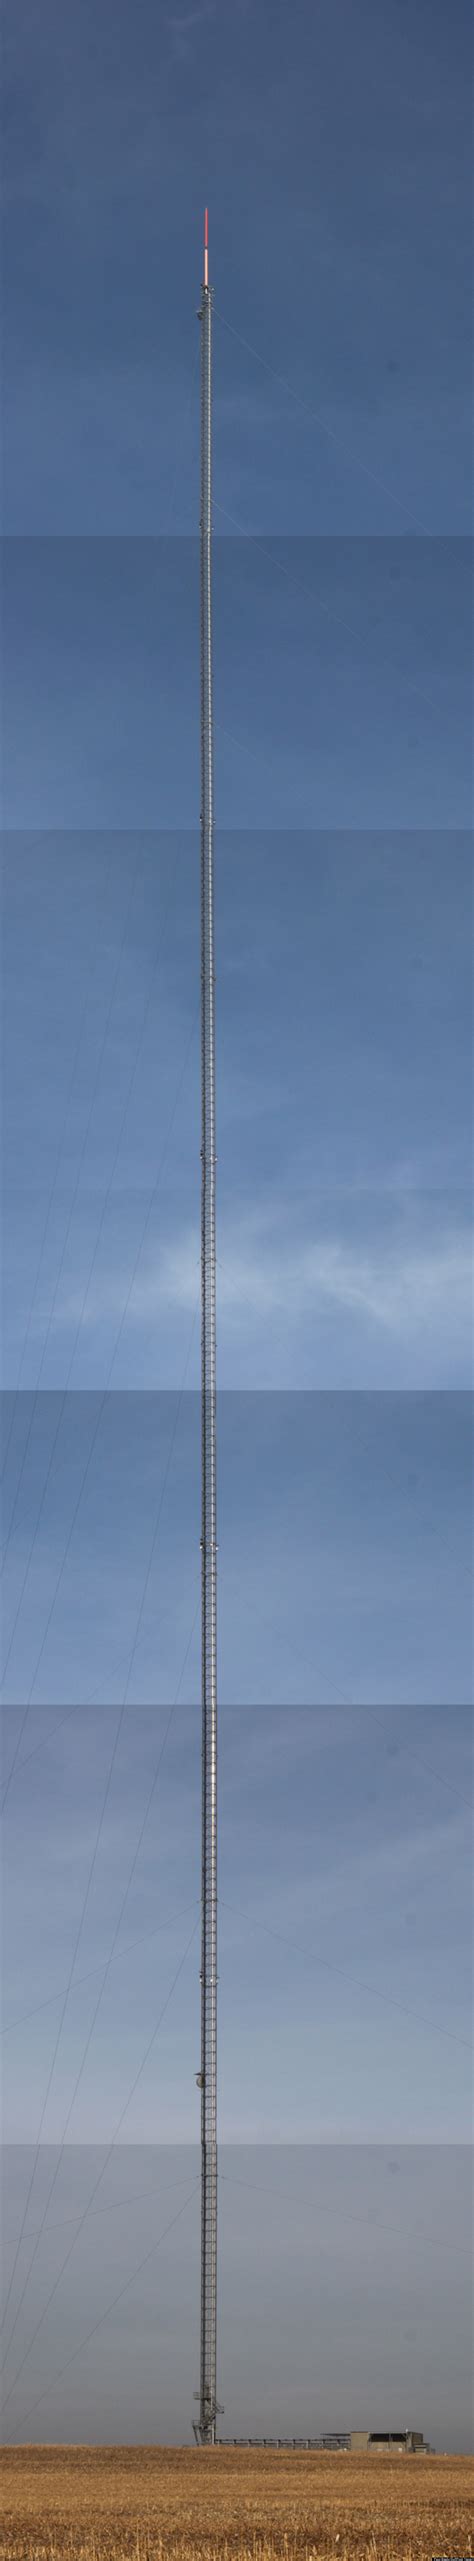 kdlt mast  worlds  tallest transmission tower stands  south dakota photo